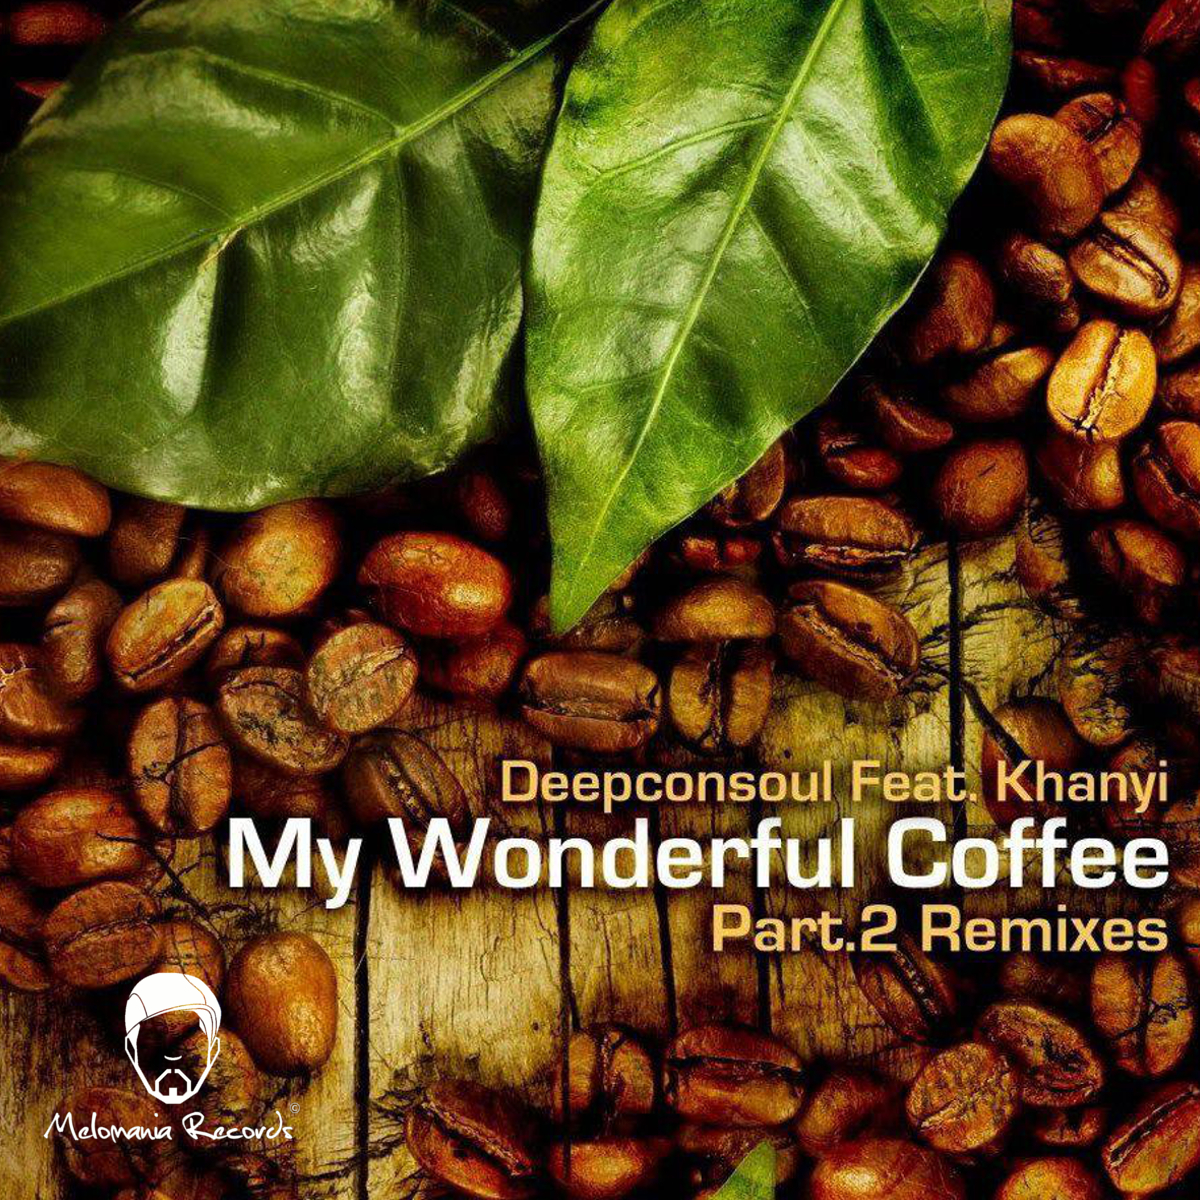 Deepconsoul feat. Khanyi - My Wonderful Coffee EP Part.2 Remixes